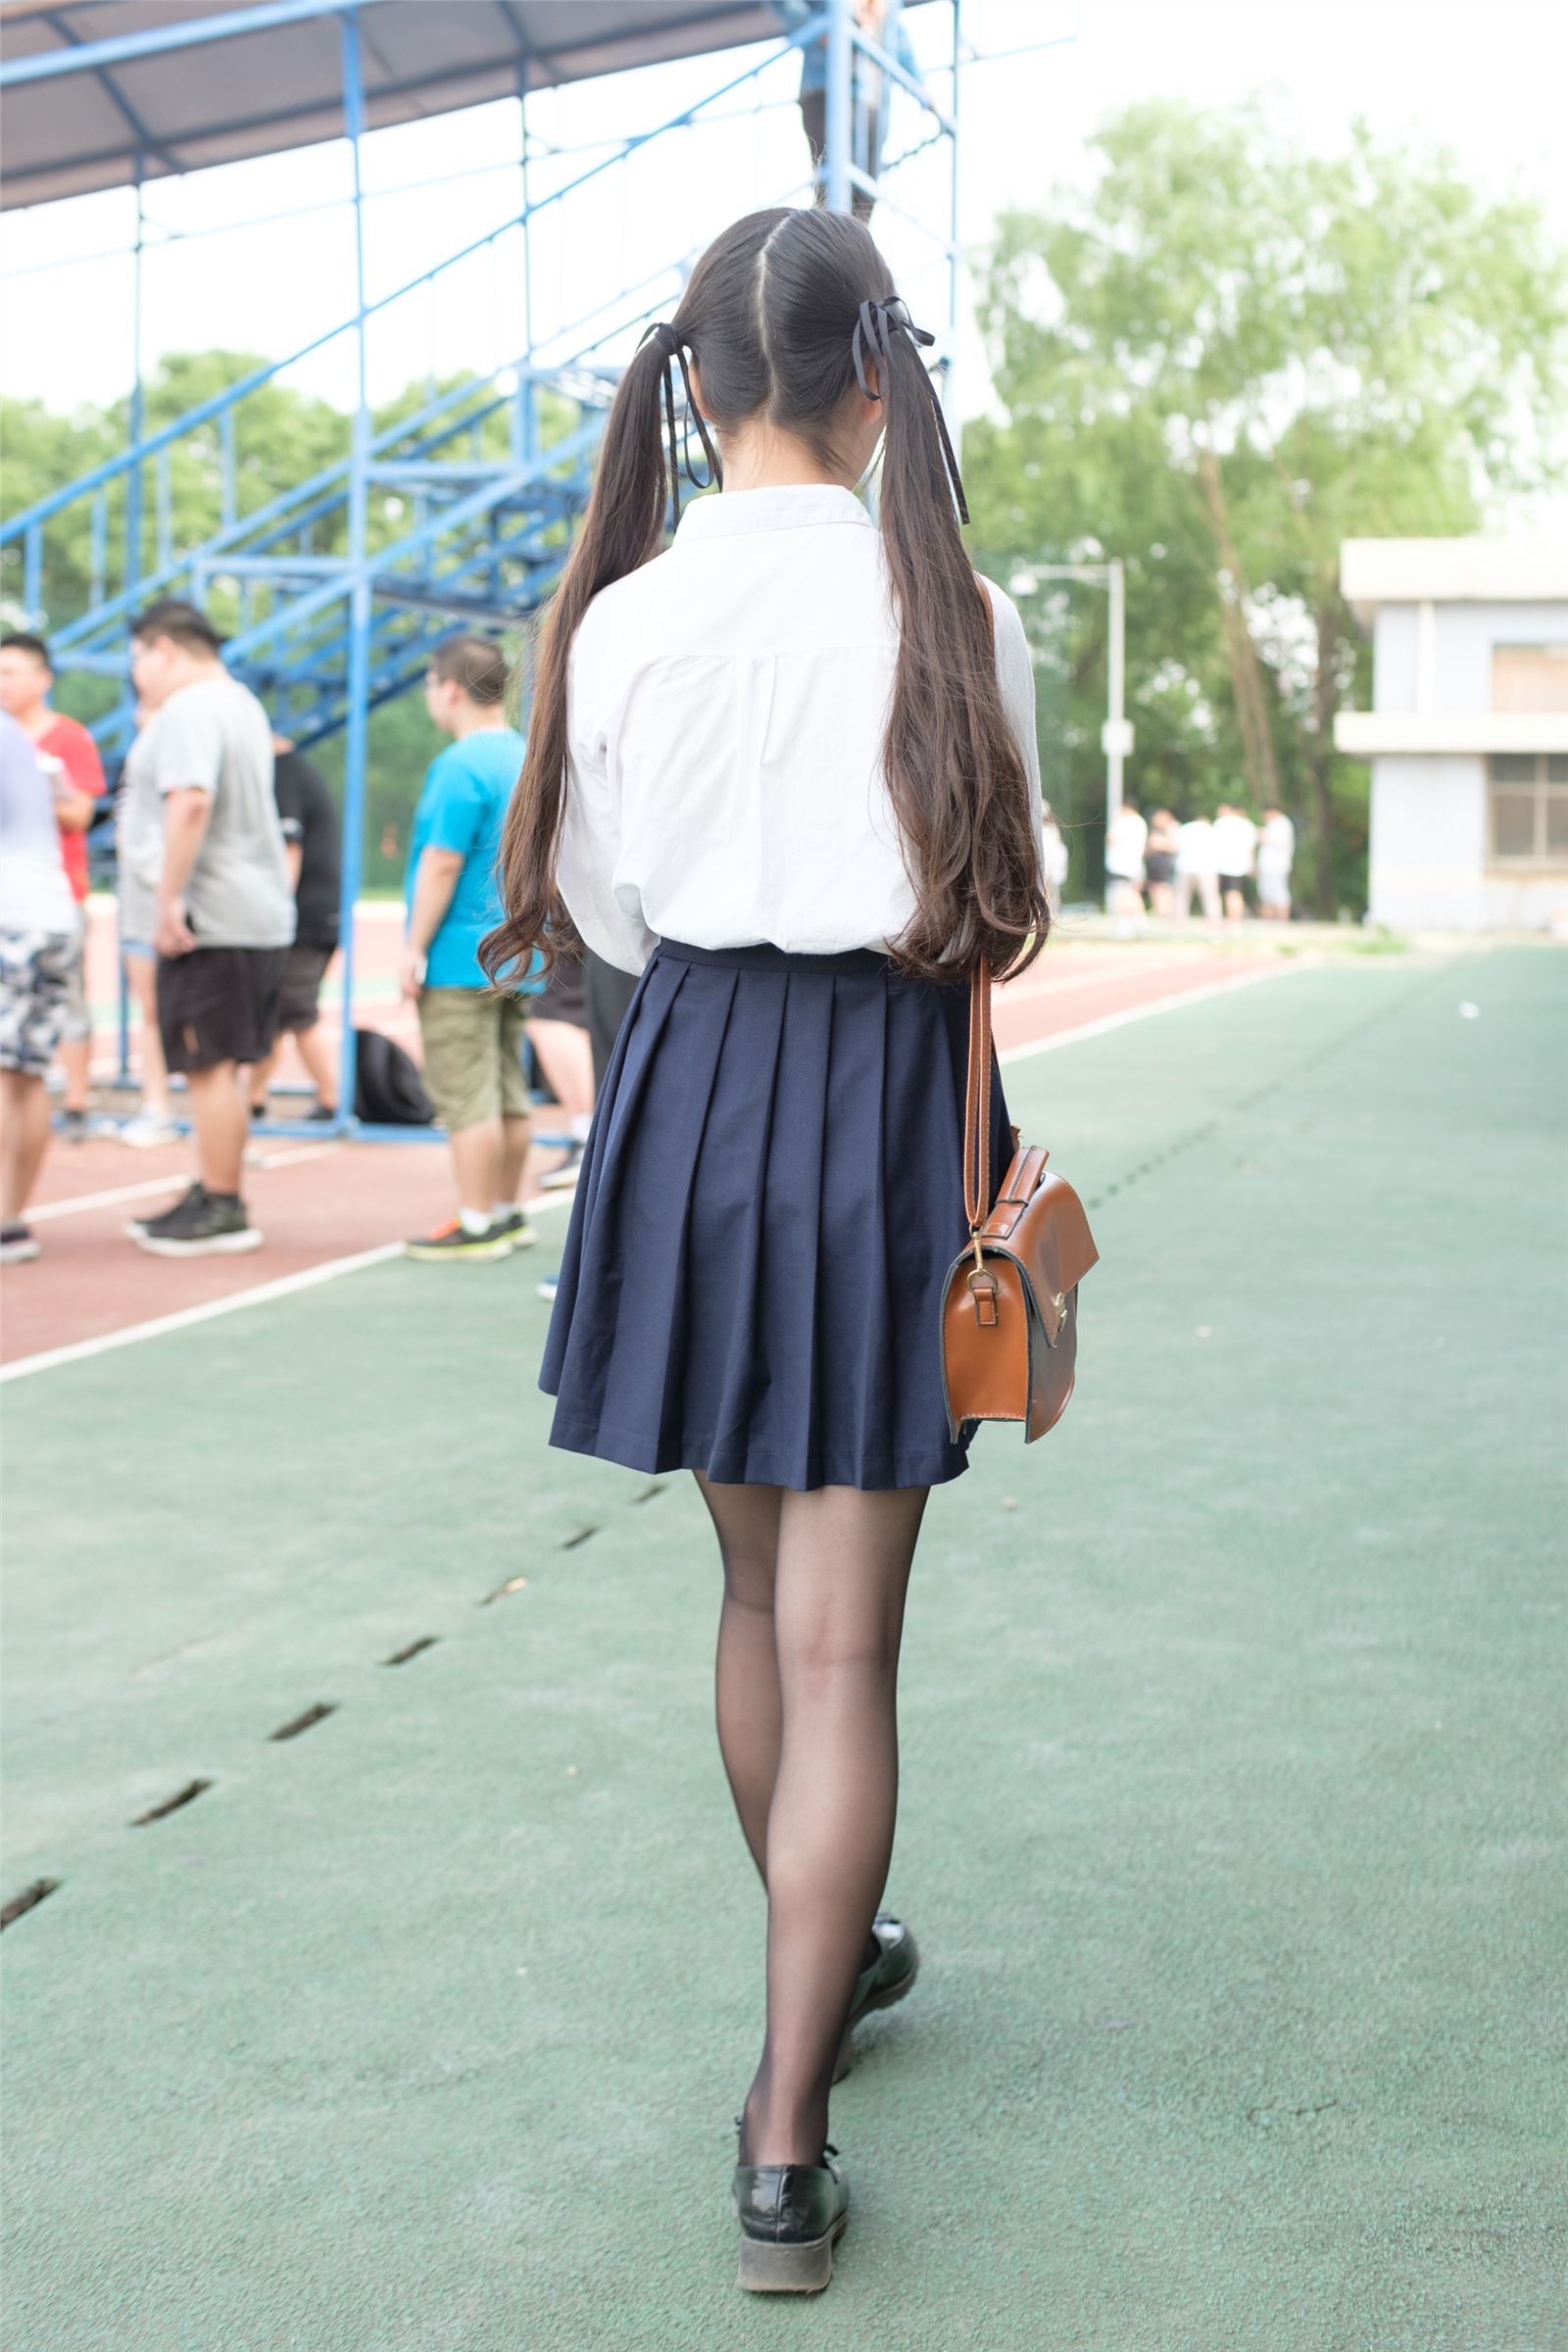 Photo by Senluo group - [ssr-009] outdoor black silk schoolgirl